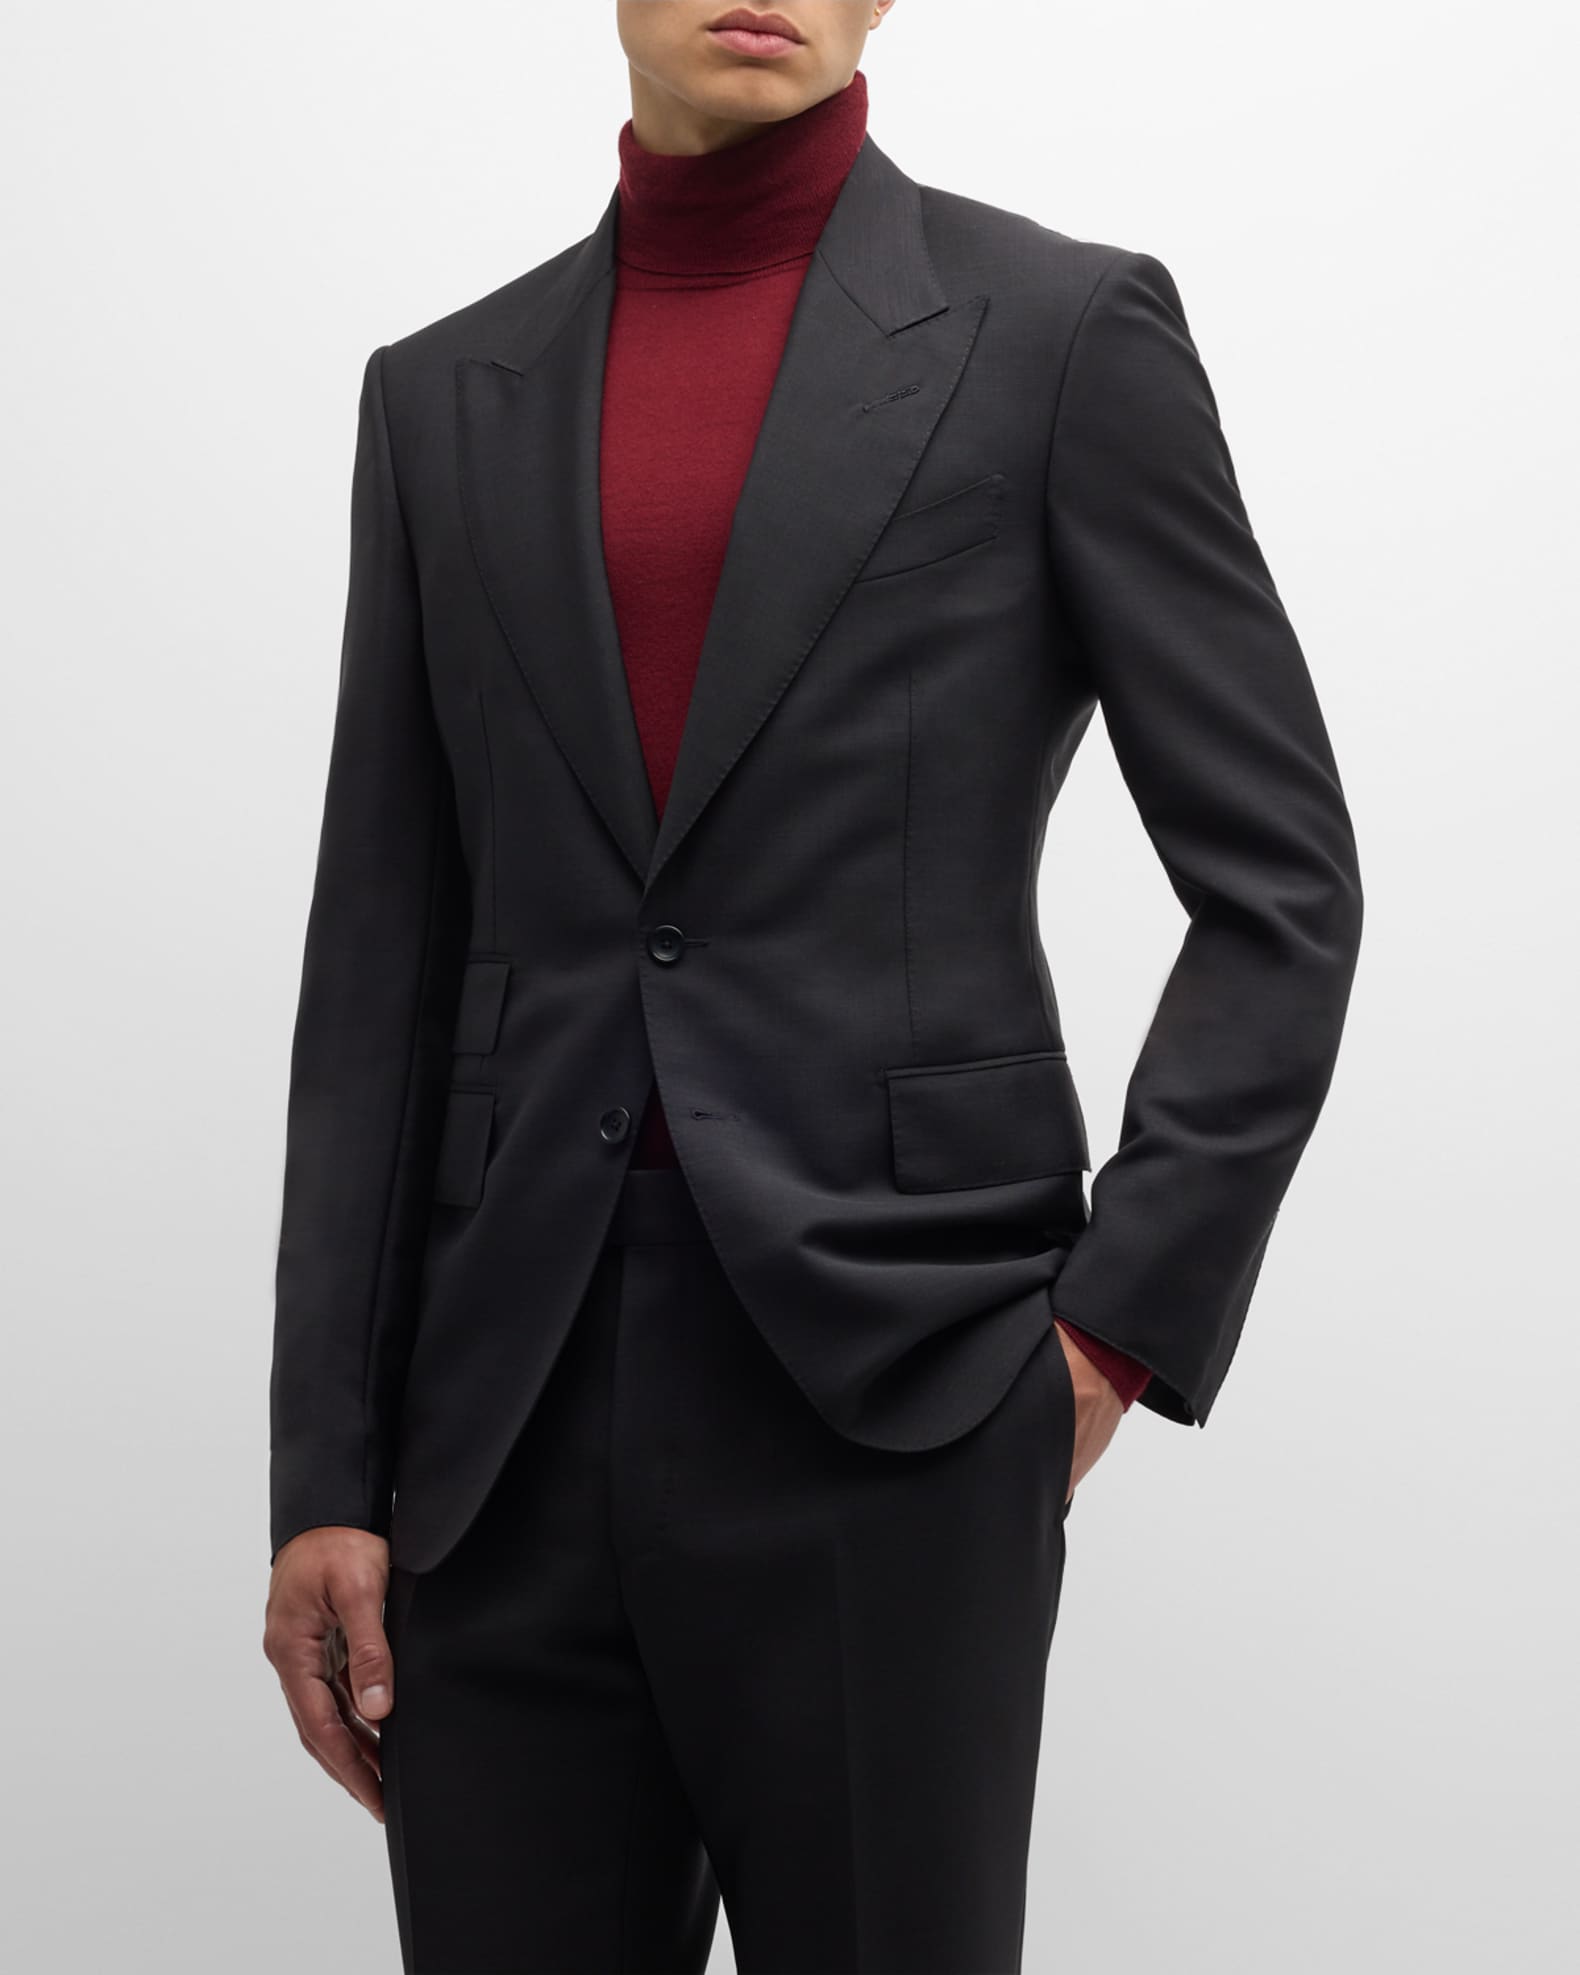 TOM FORD Men's Shelton Solid Mohair Suit | Neiman Marcus